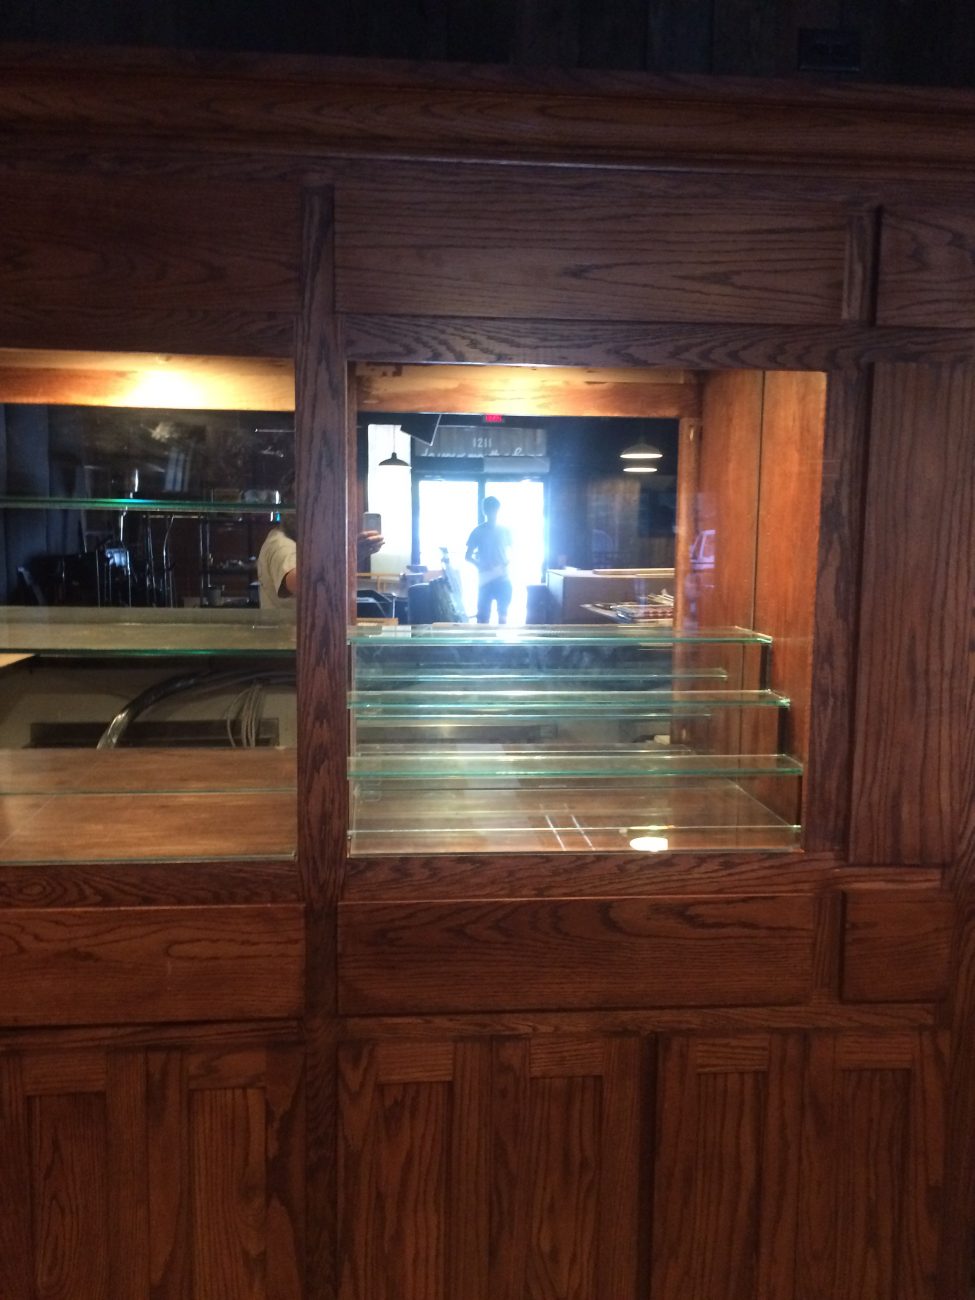 Glass shelving inside wood cabinets